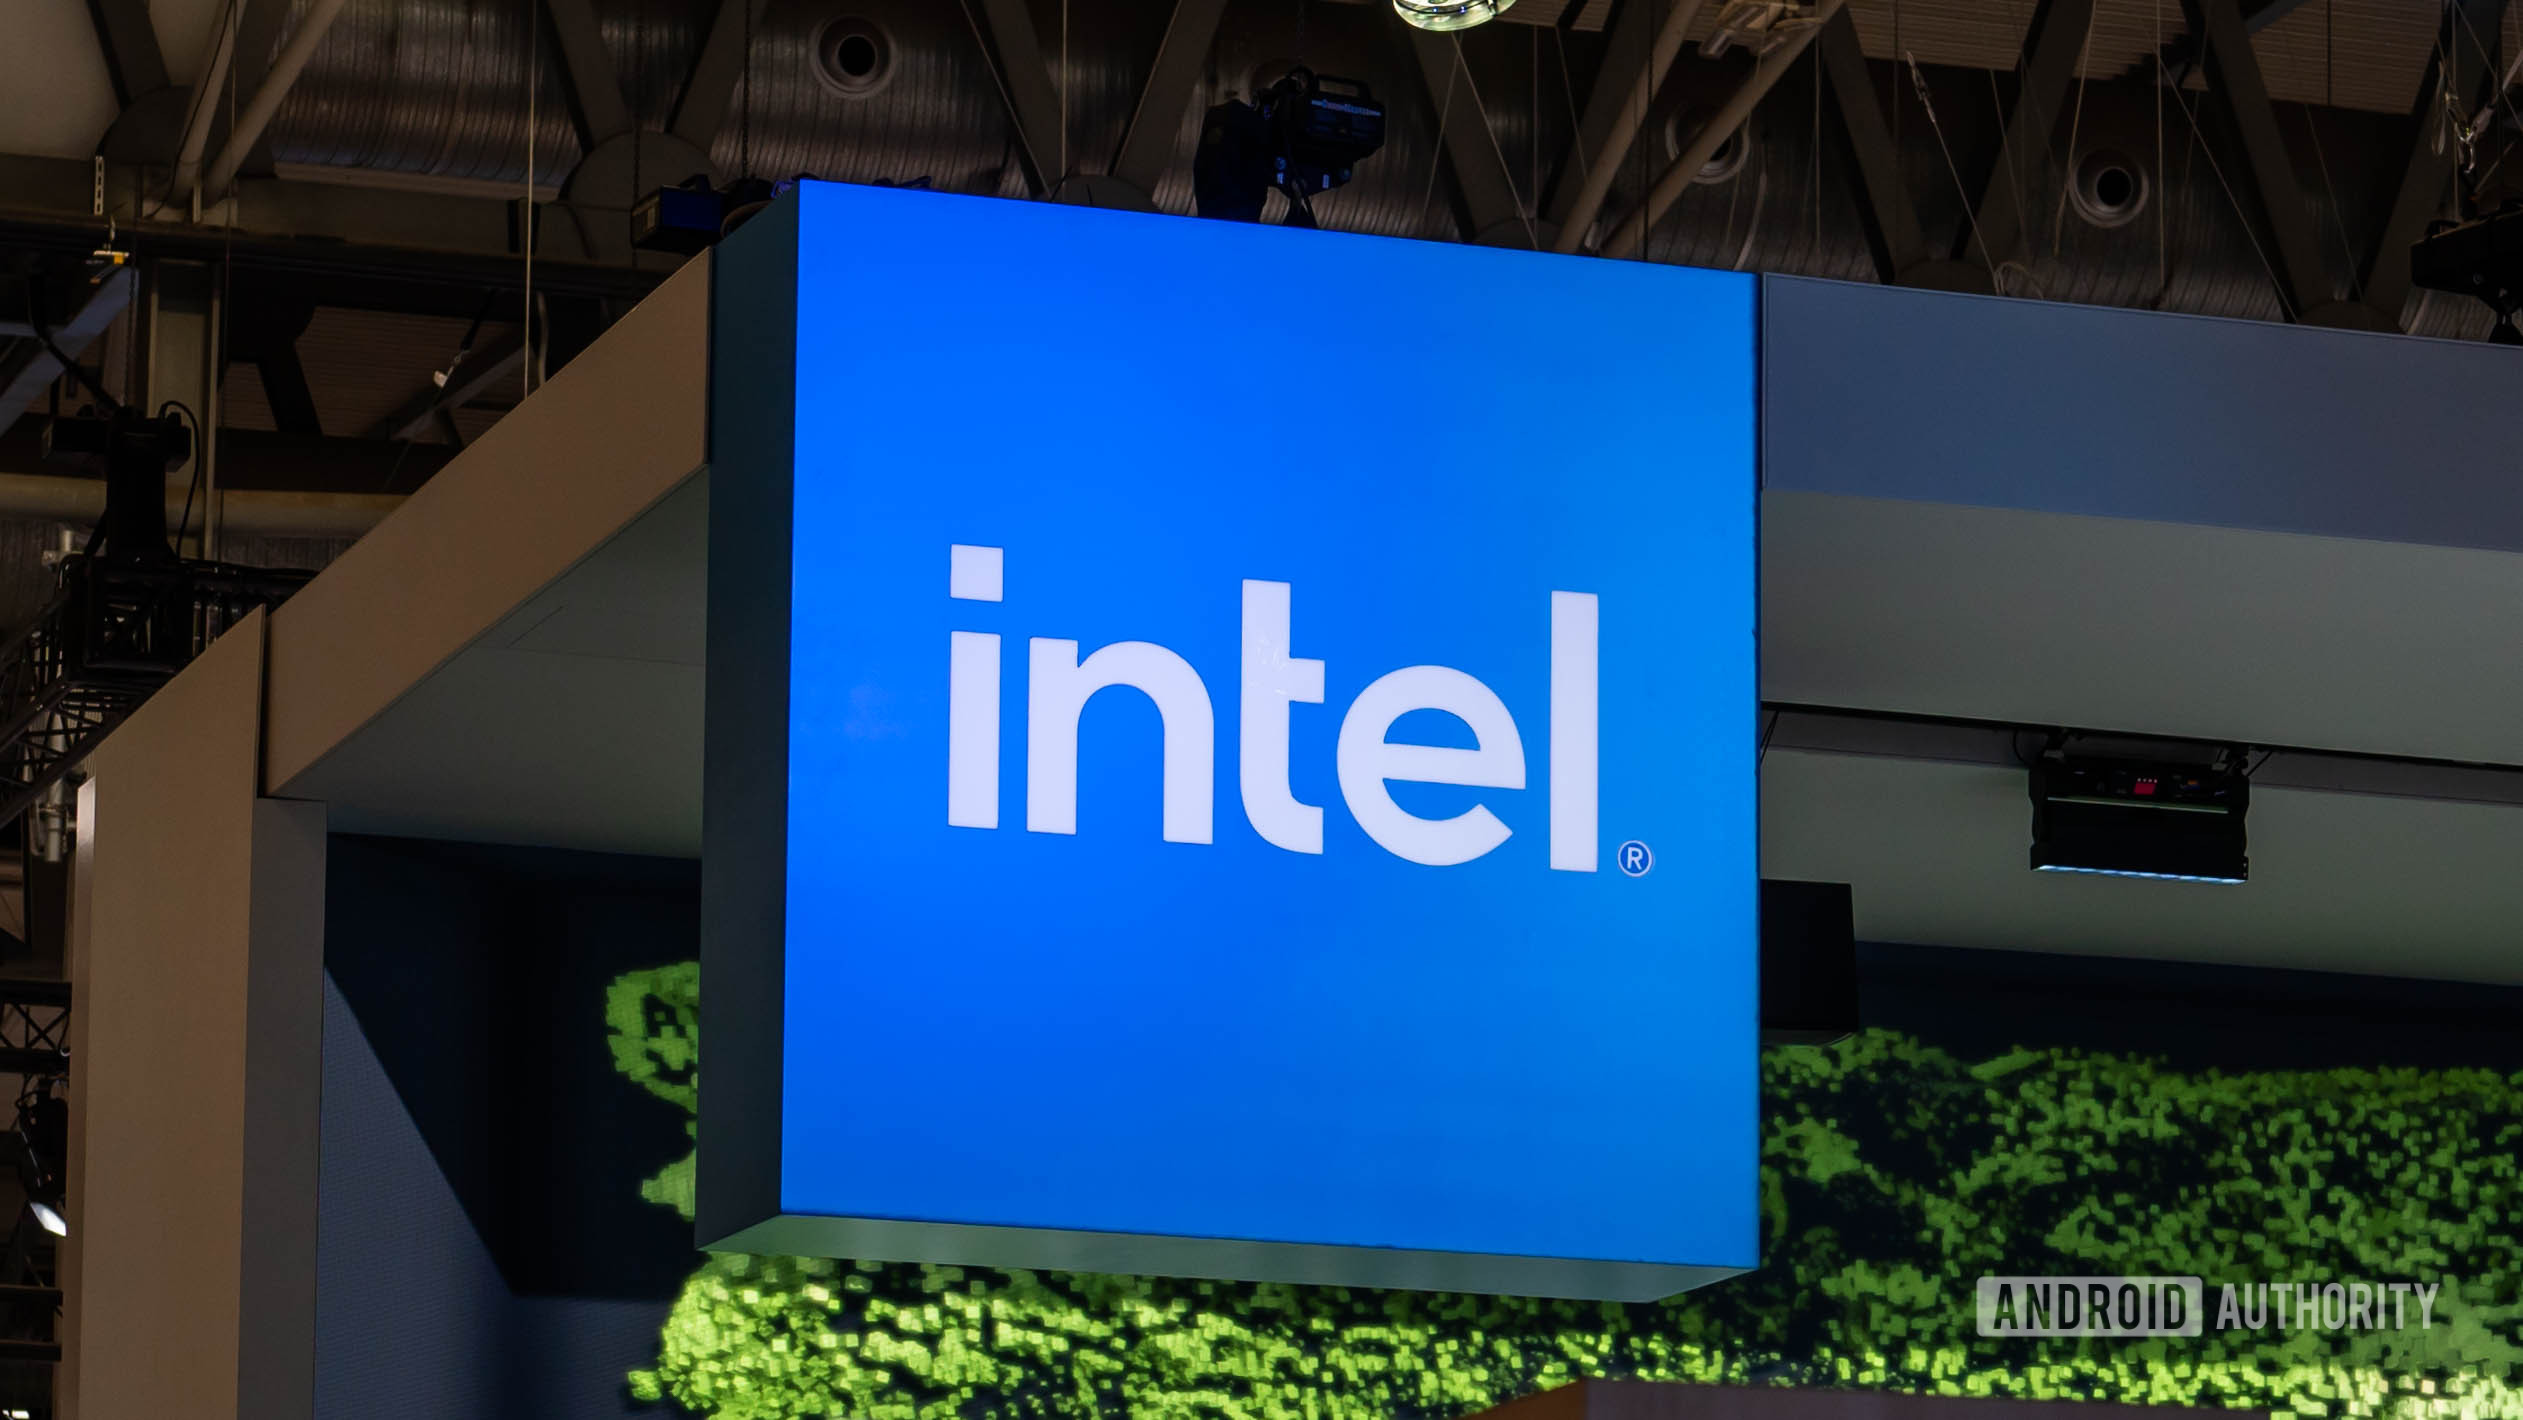 Intel logo on sign